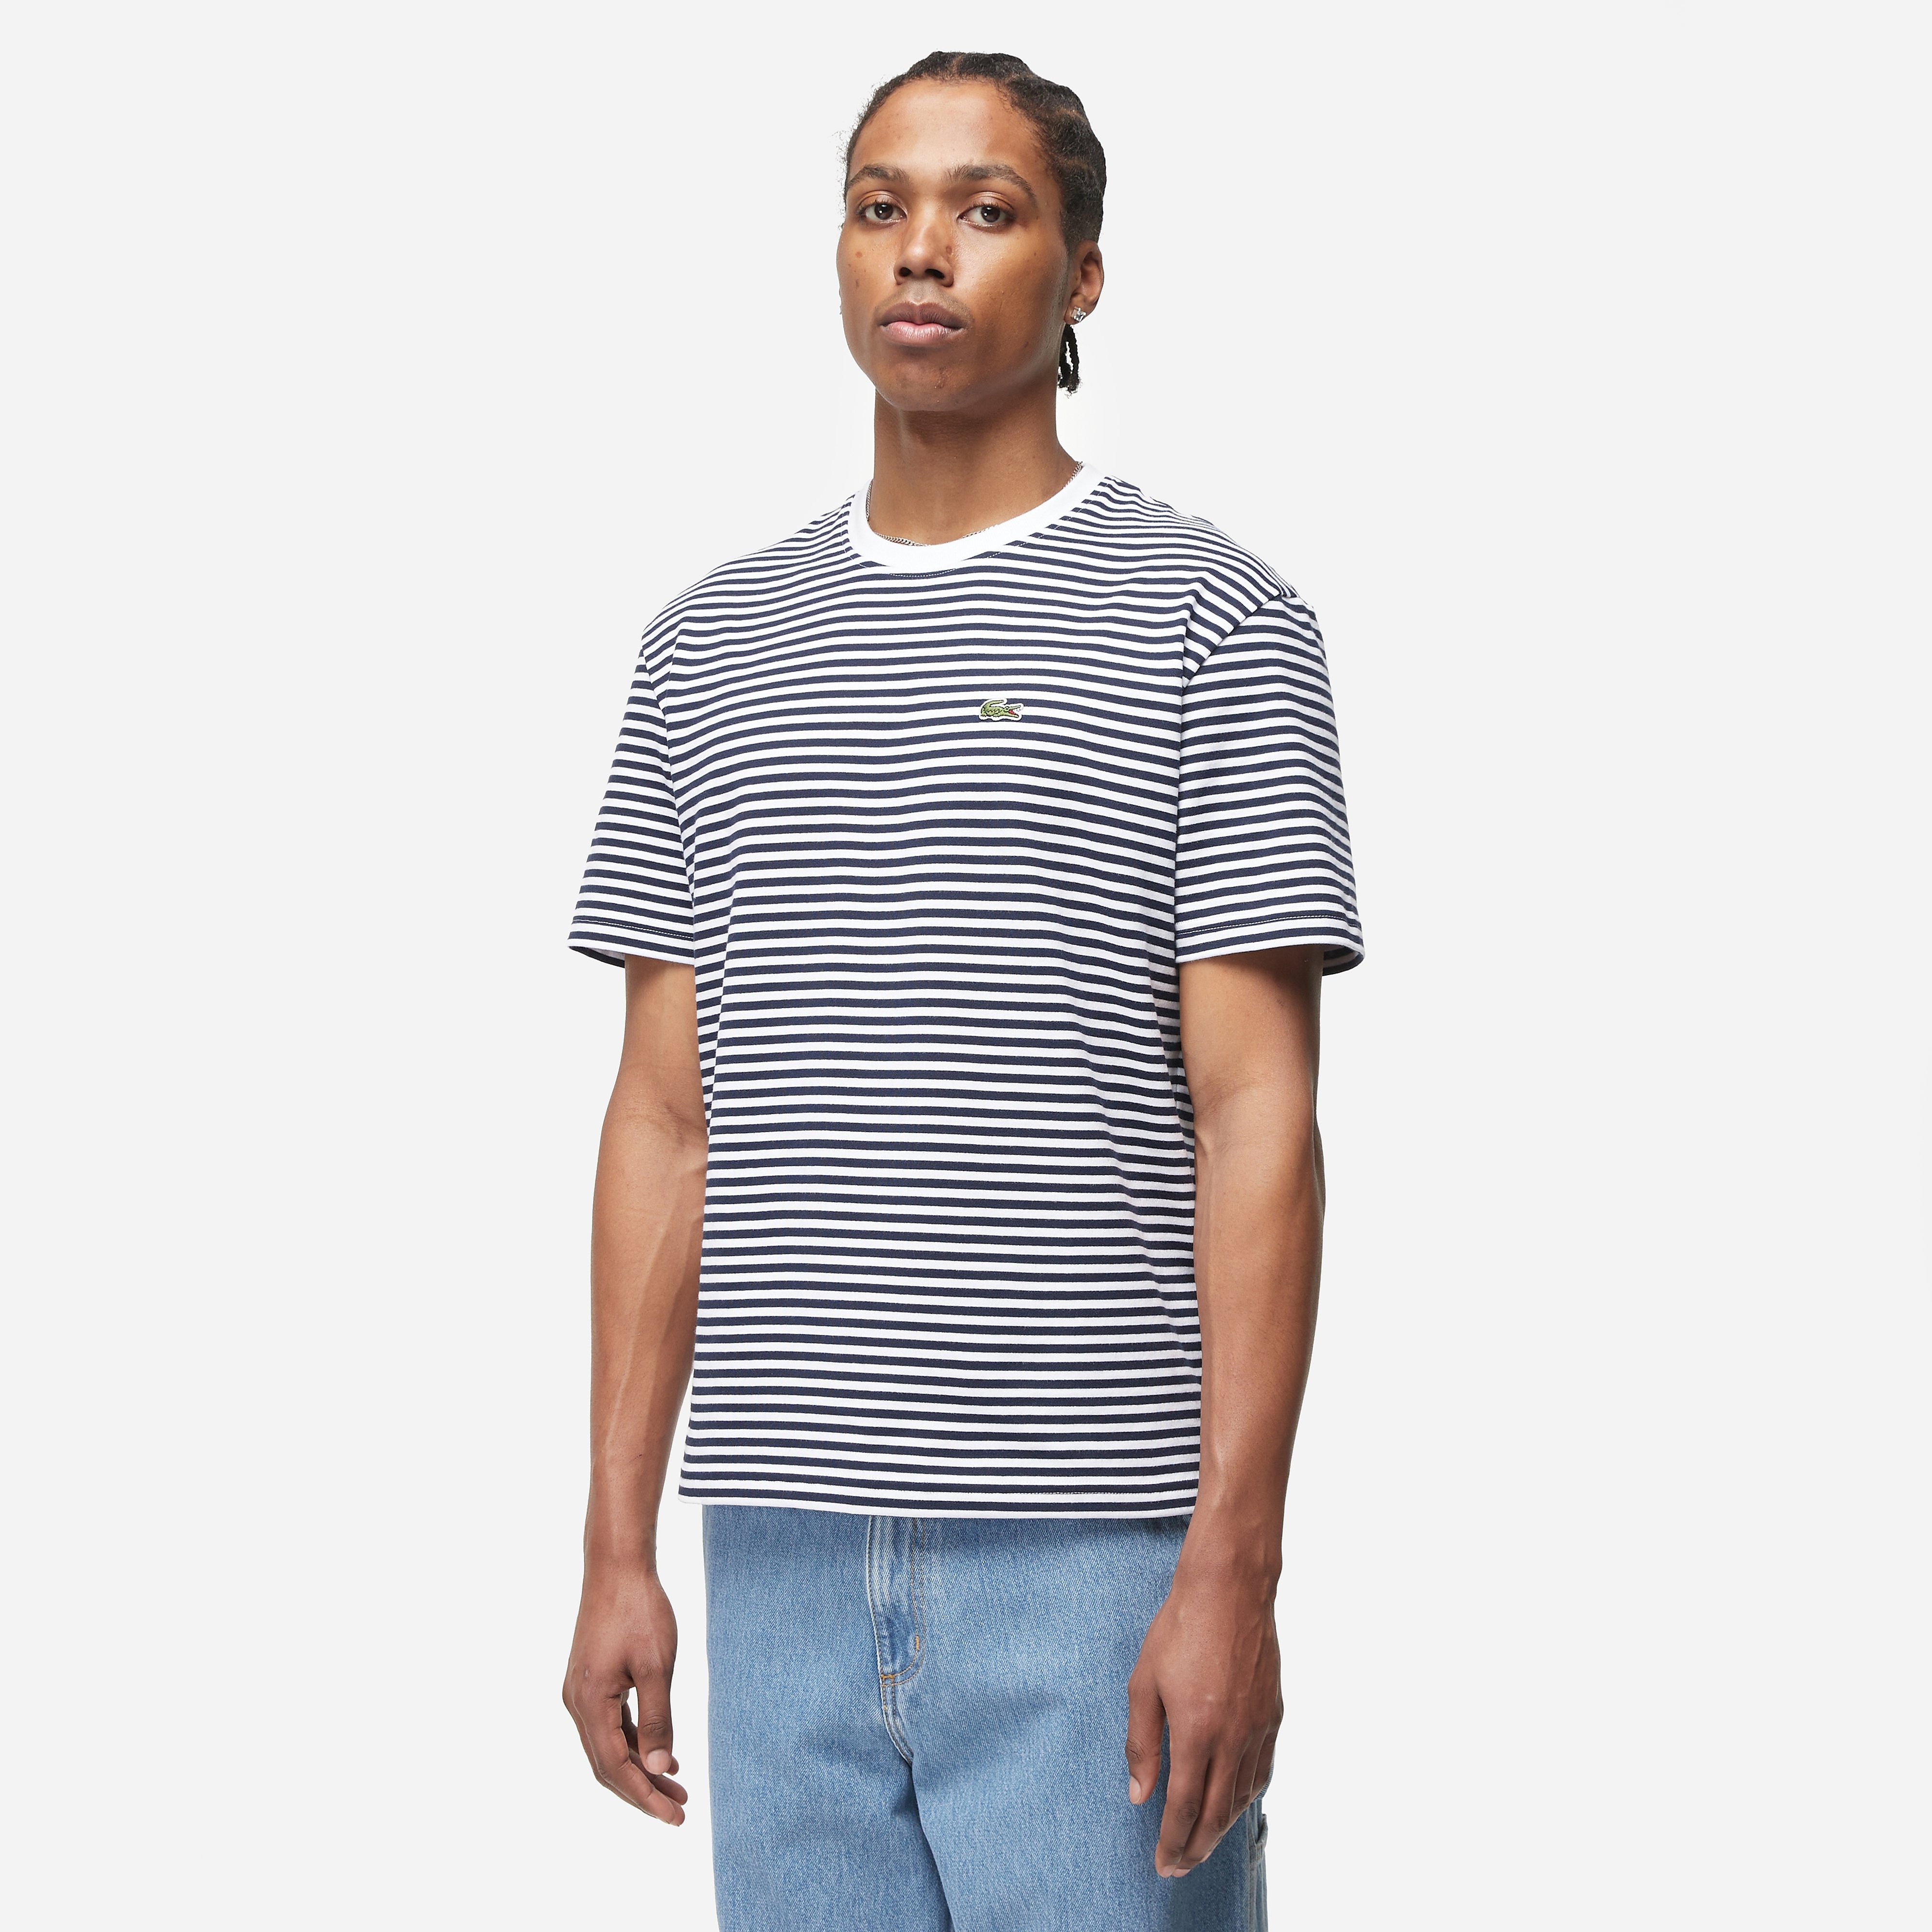 Lacoste Yarn Dyed Stripe T-Shirt, Blue